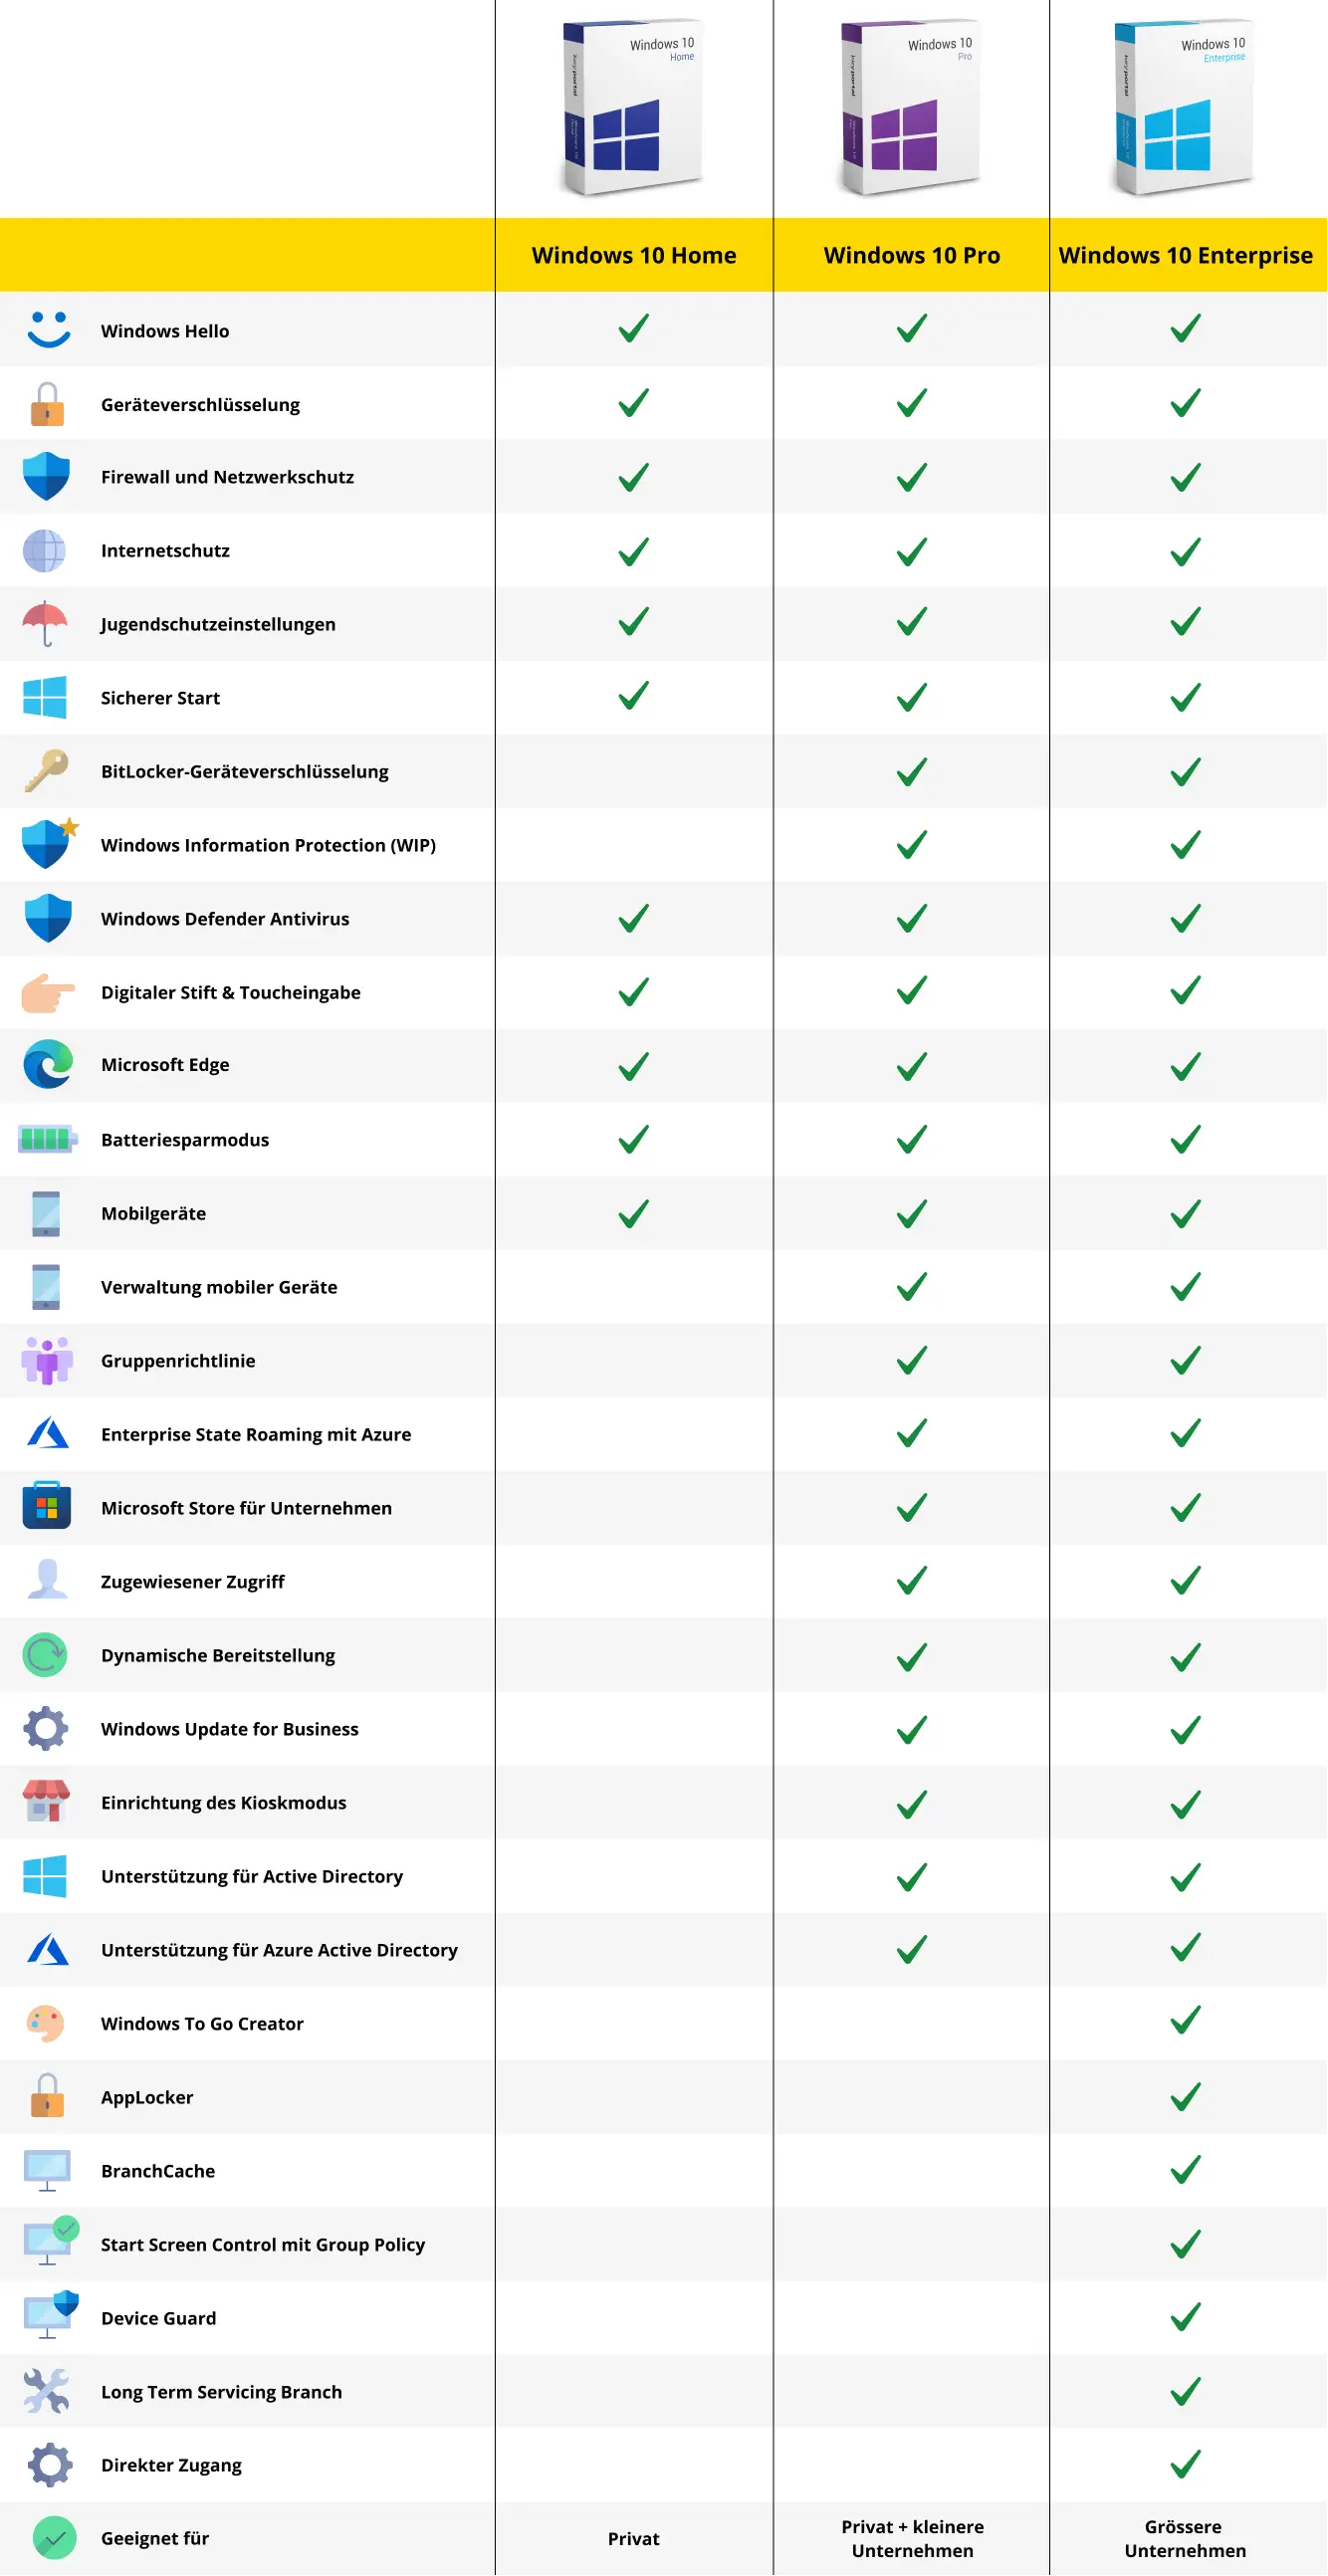 Comparison of Windows 10 Home, Pro and Enterprise features